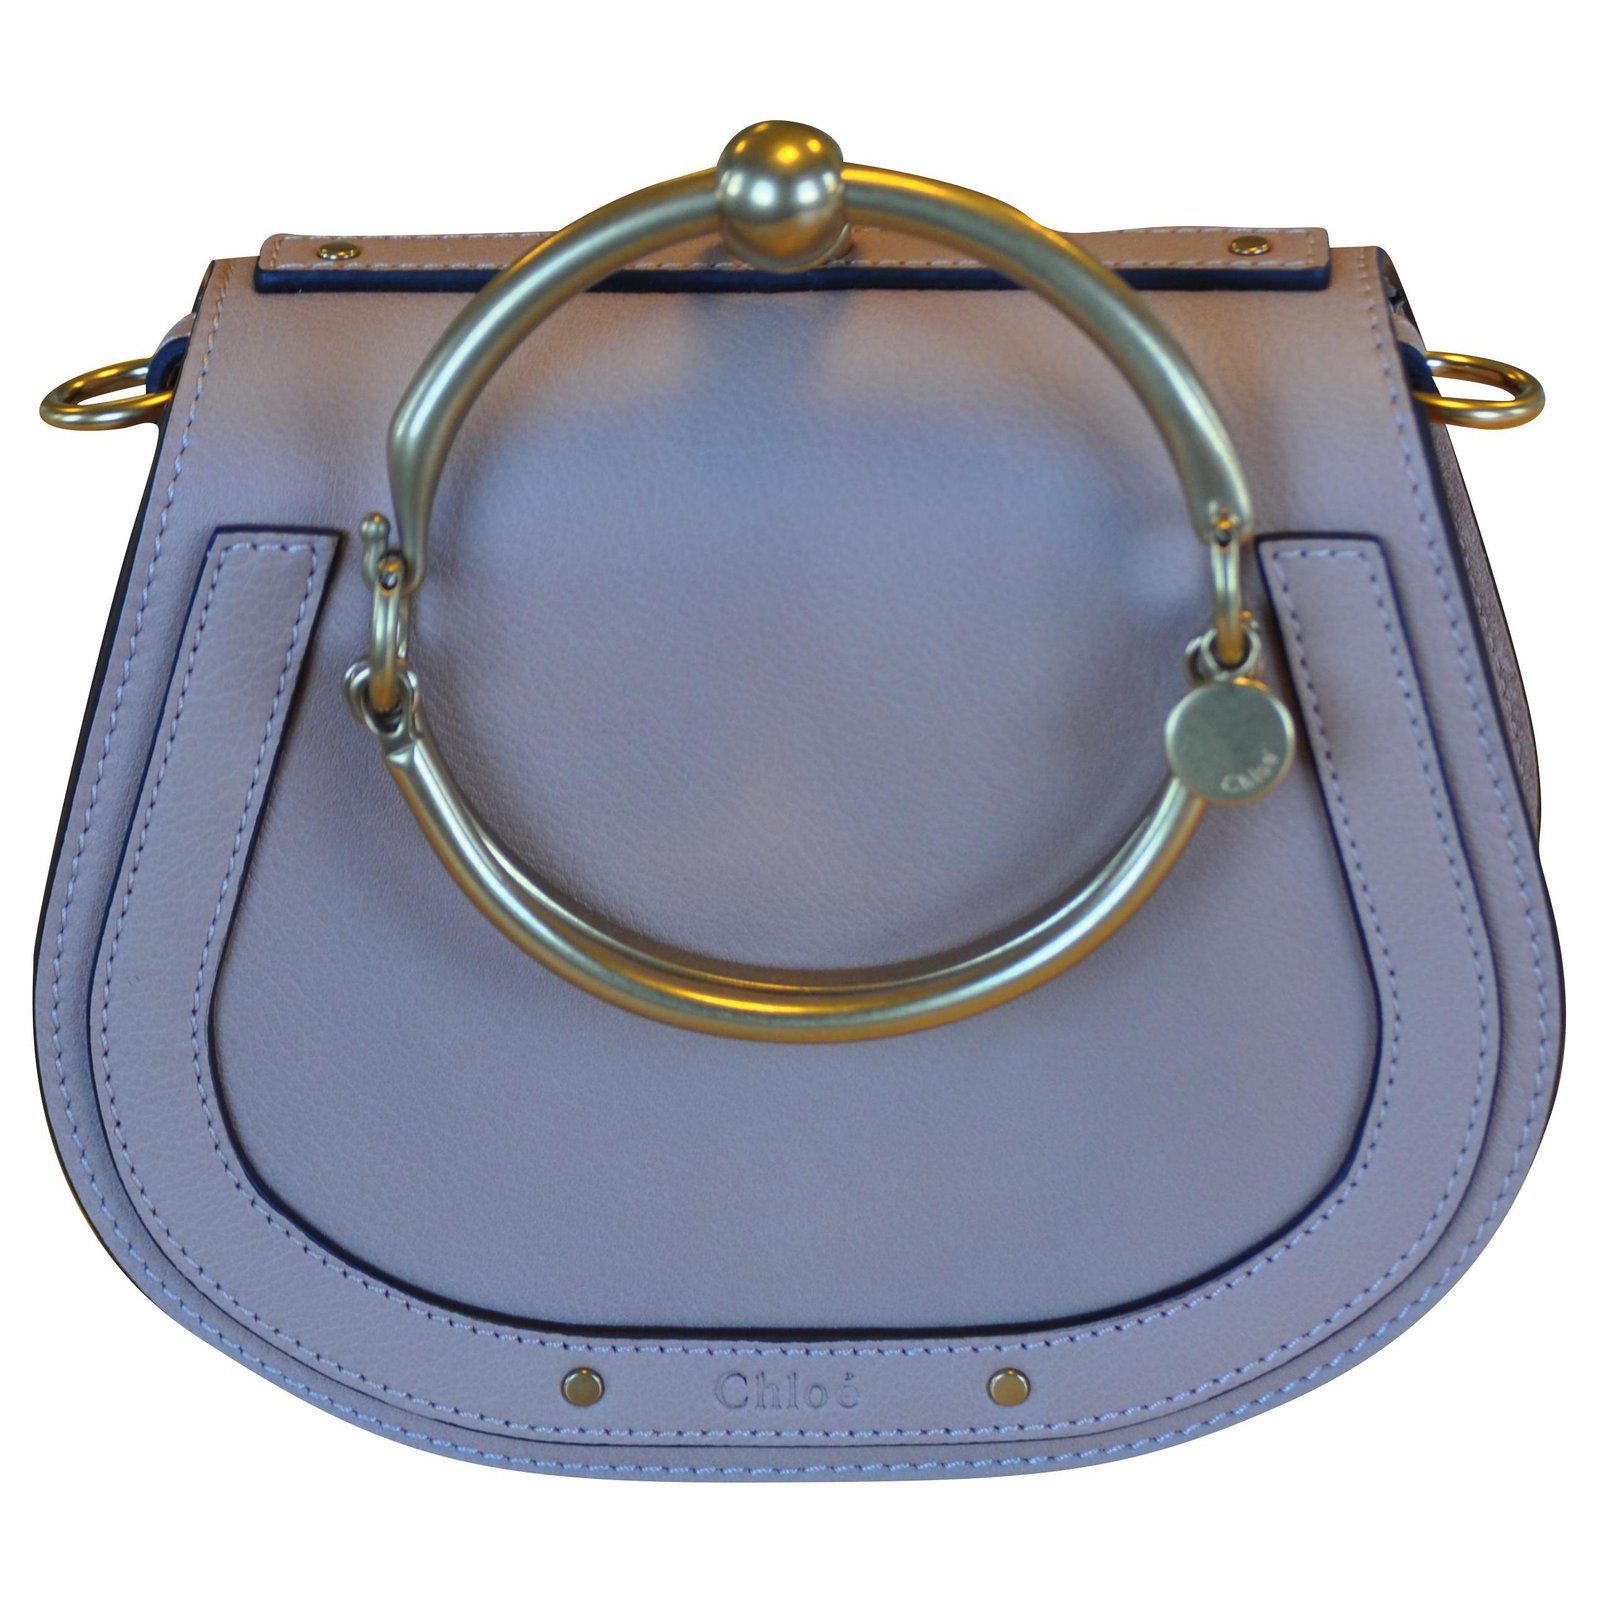 Chloé Medium Nile Leather Saddle Bracelet Bag on SALE